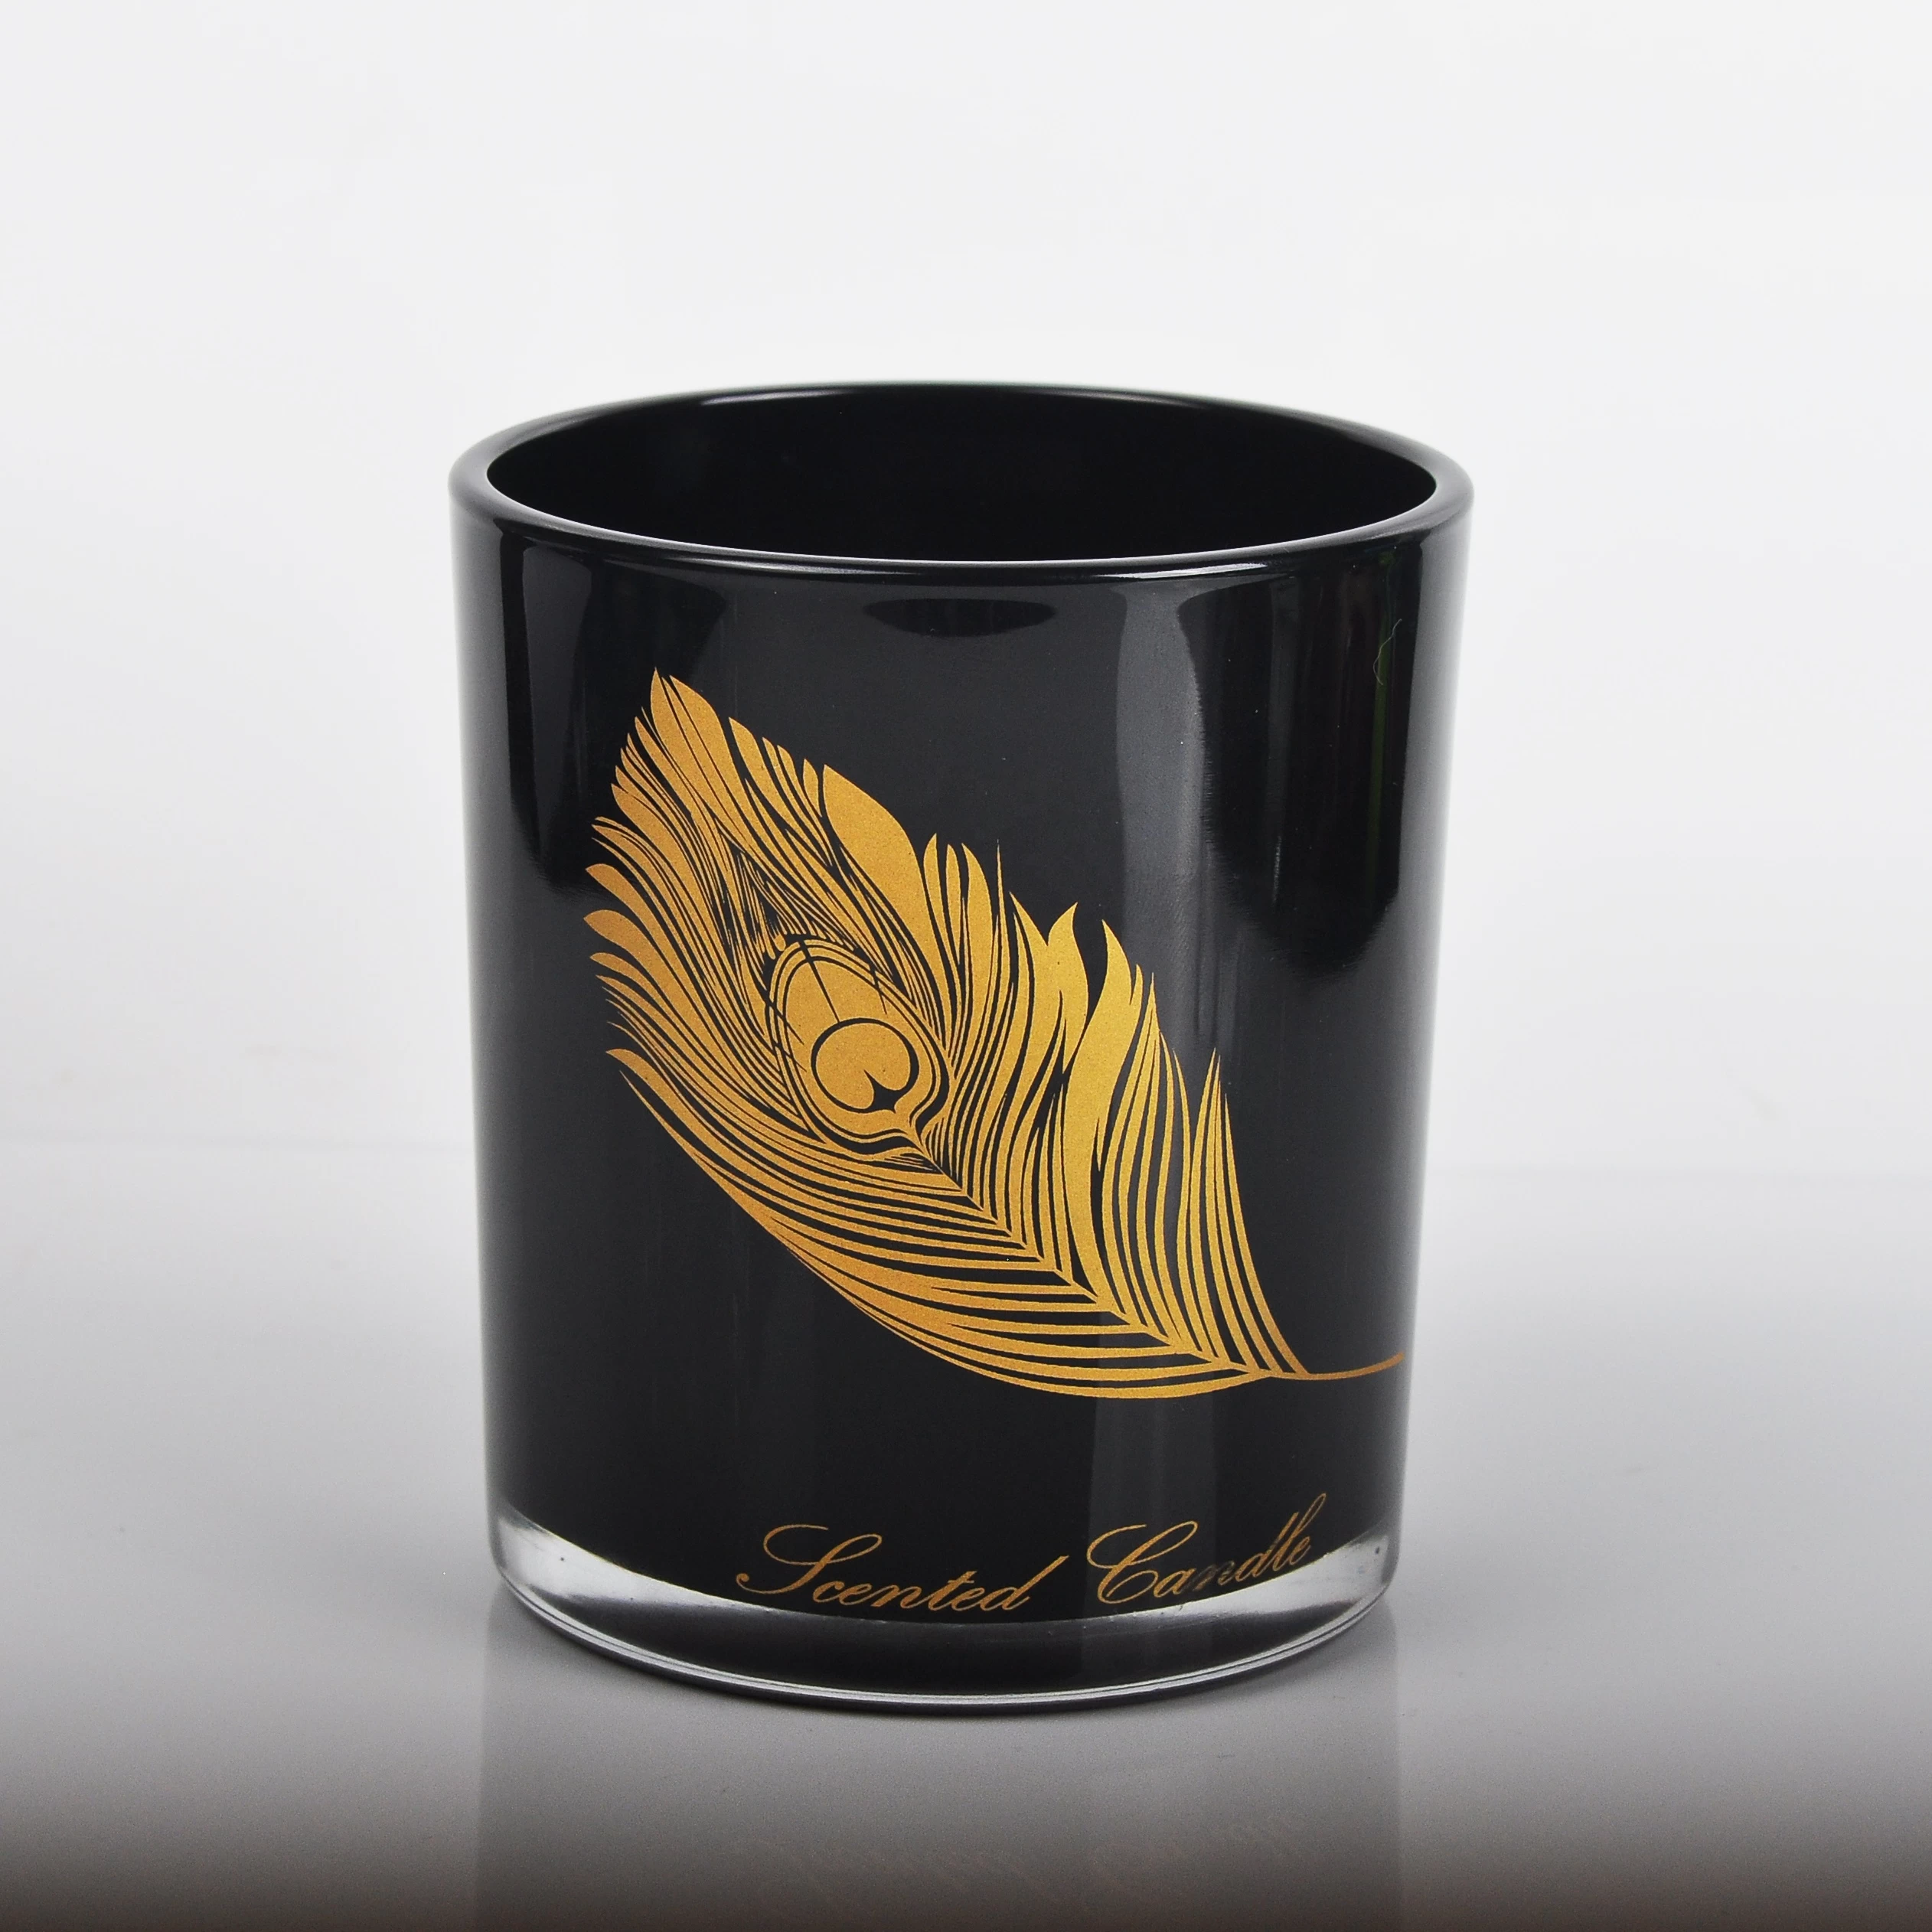 Sunny luxury black custom pattern glass candle holders